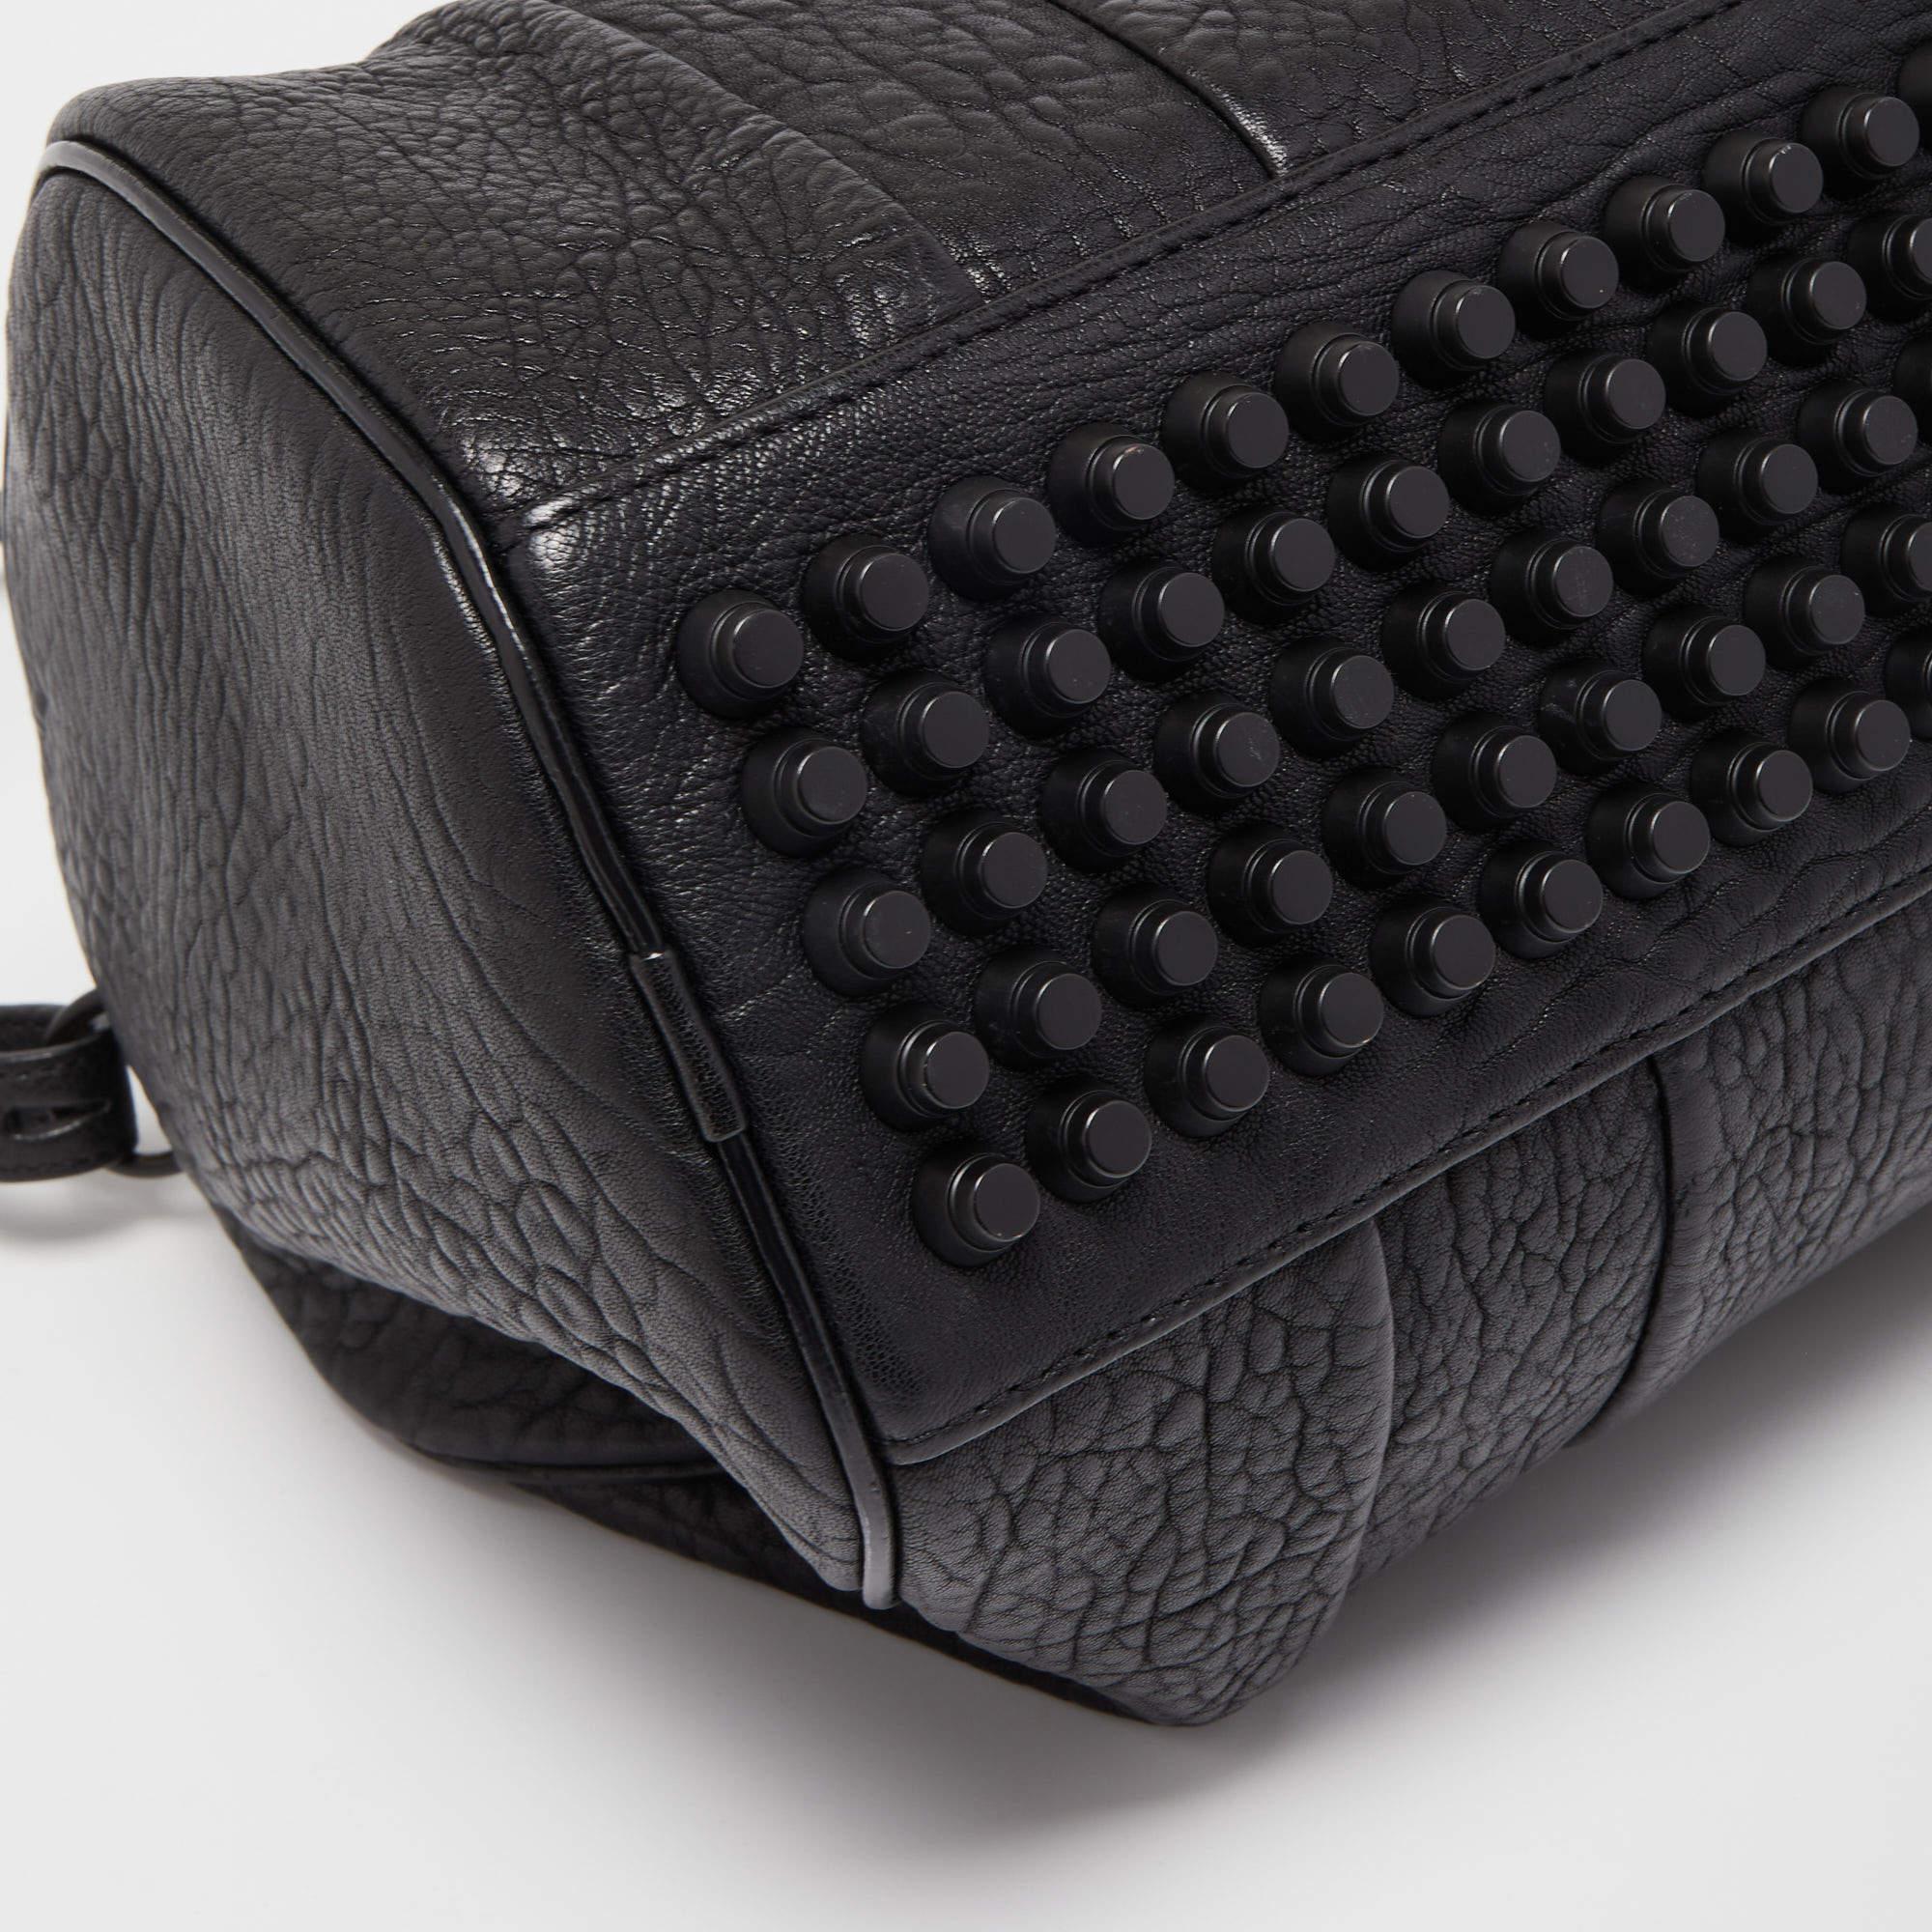 Alexander Wang Black Pebbled Leather Rocco Duffle Bag 4